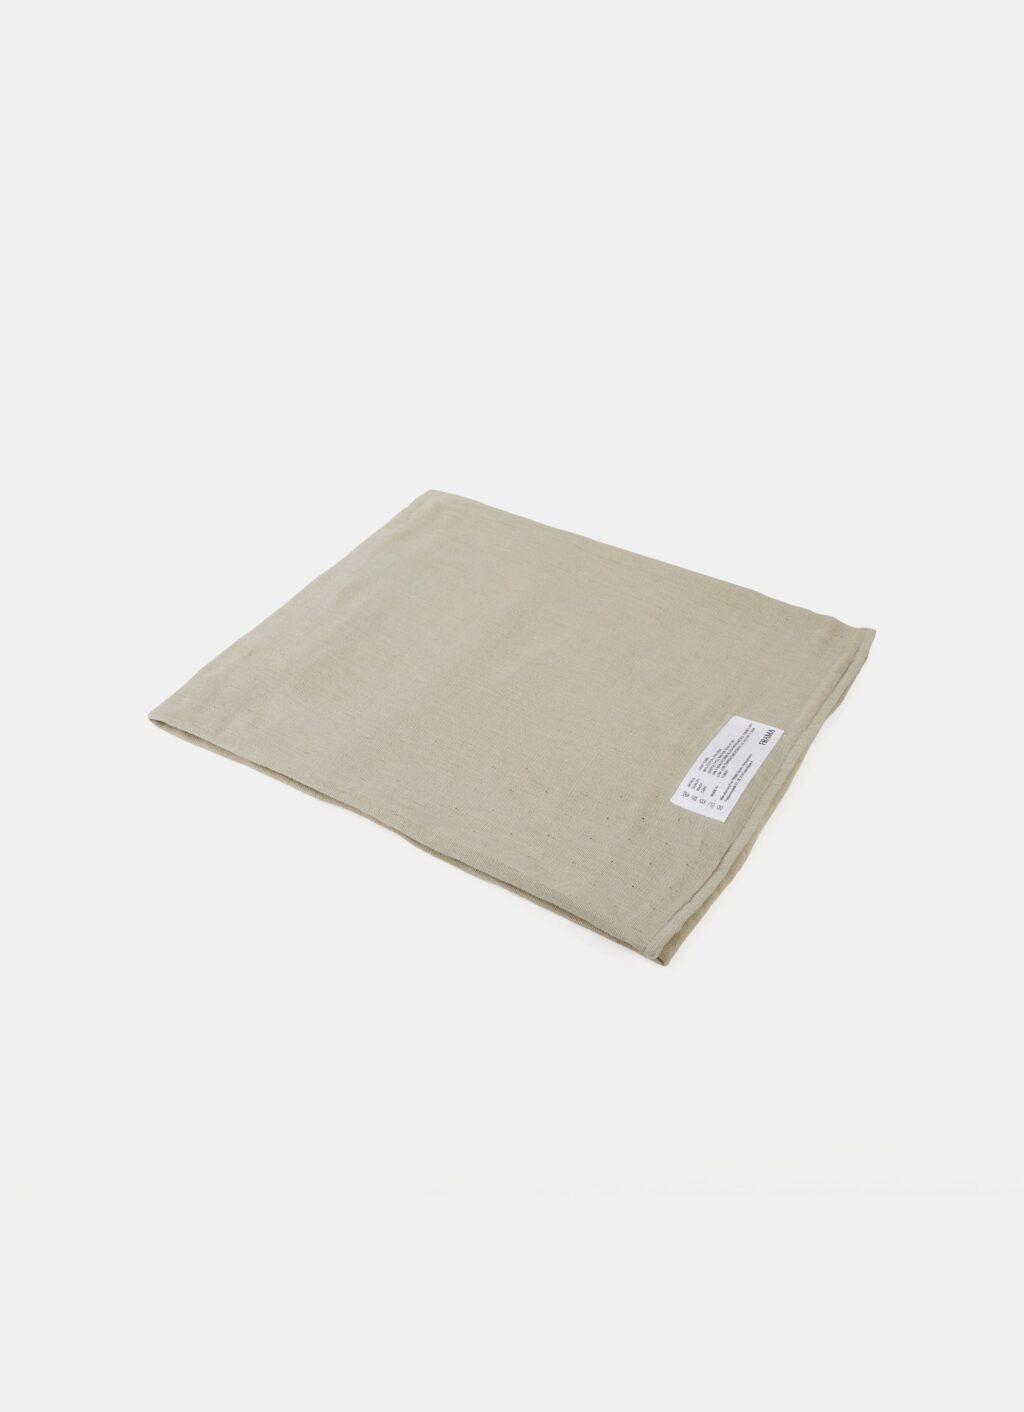 Frama - Light Towel - Sage Green - Bath Sheet